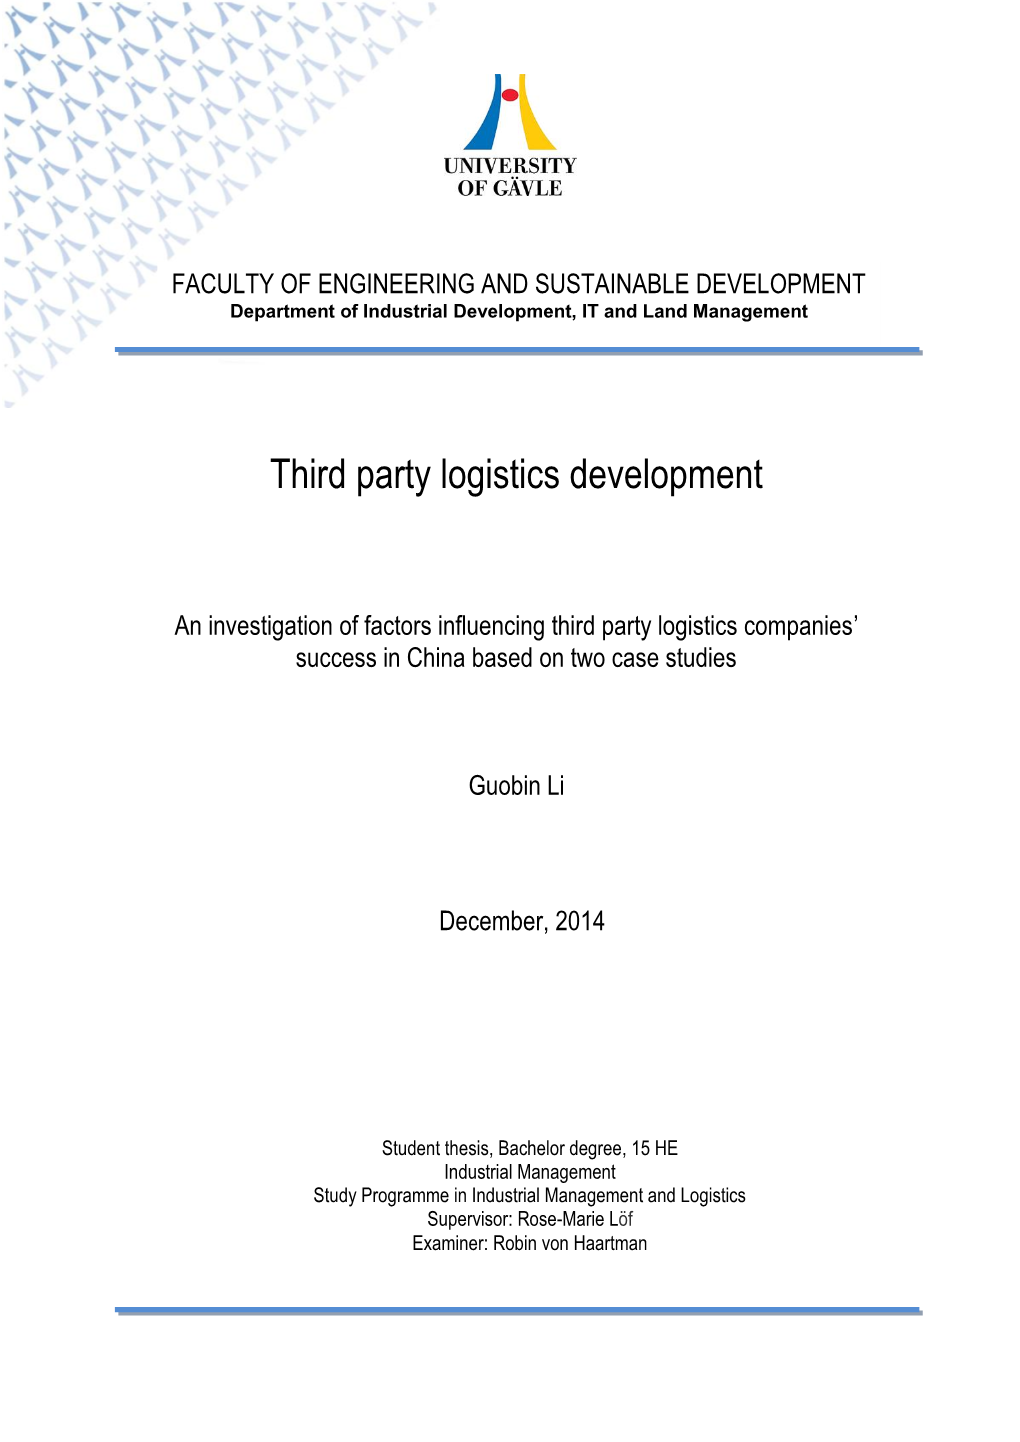 Third Party Logistics Development